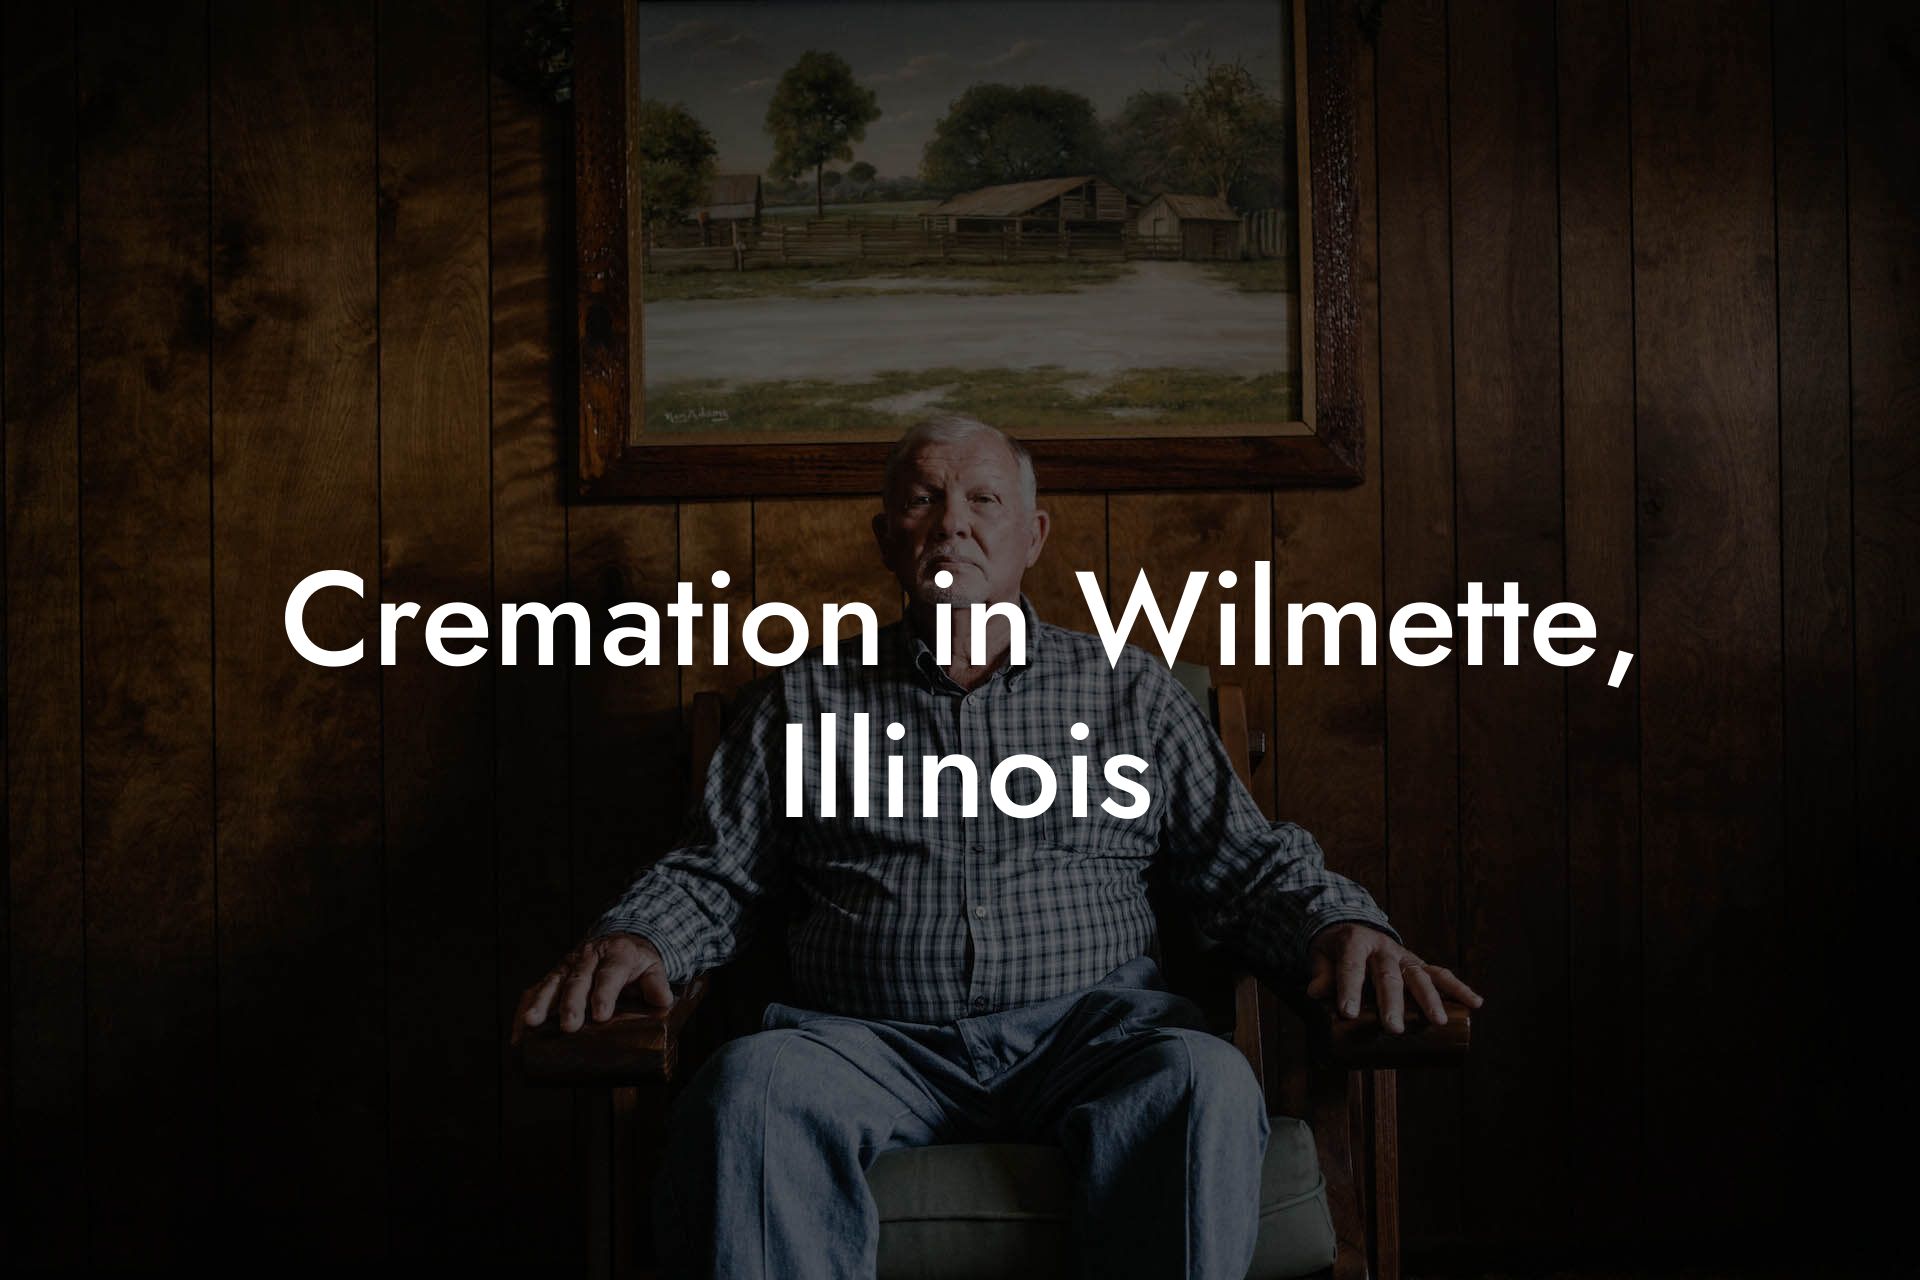 Cremation in Wilmette, Illinois